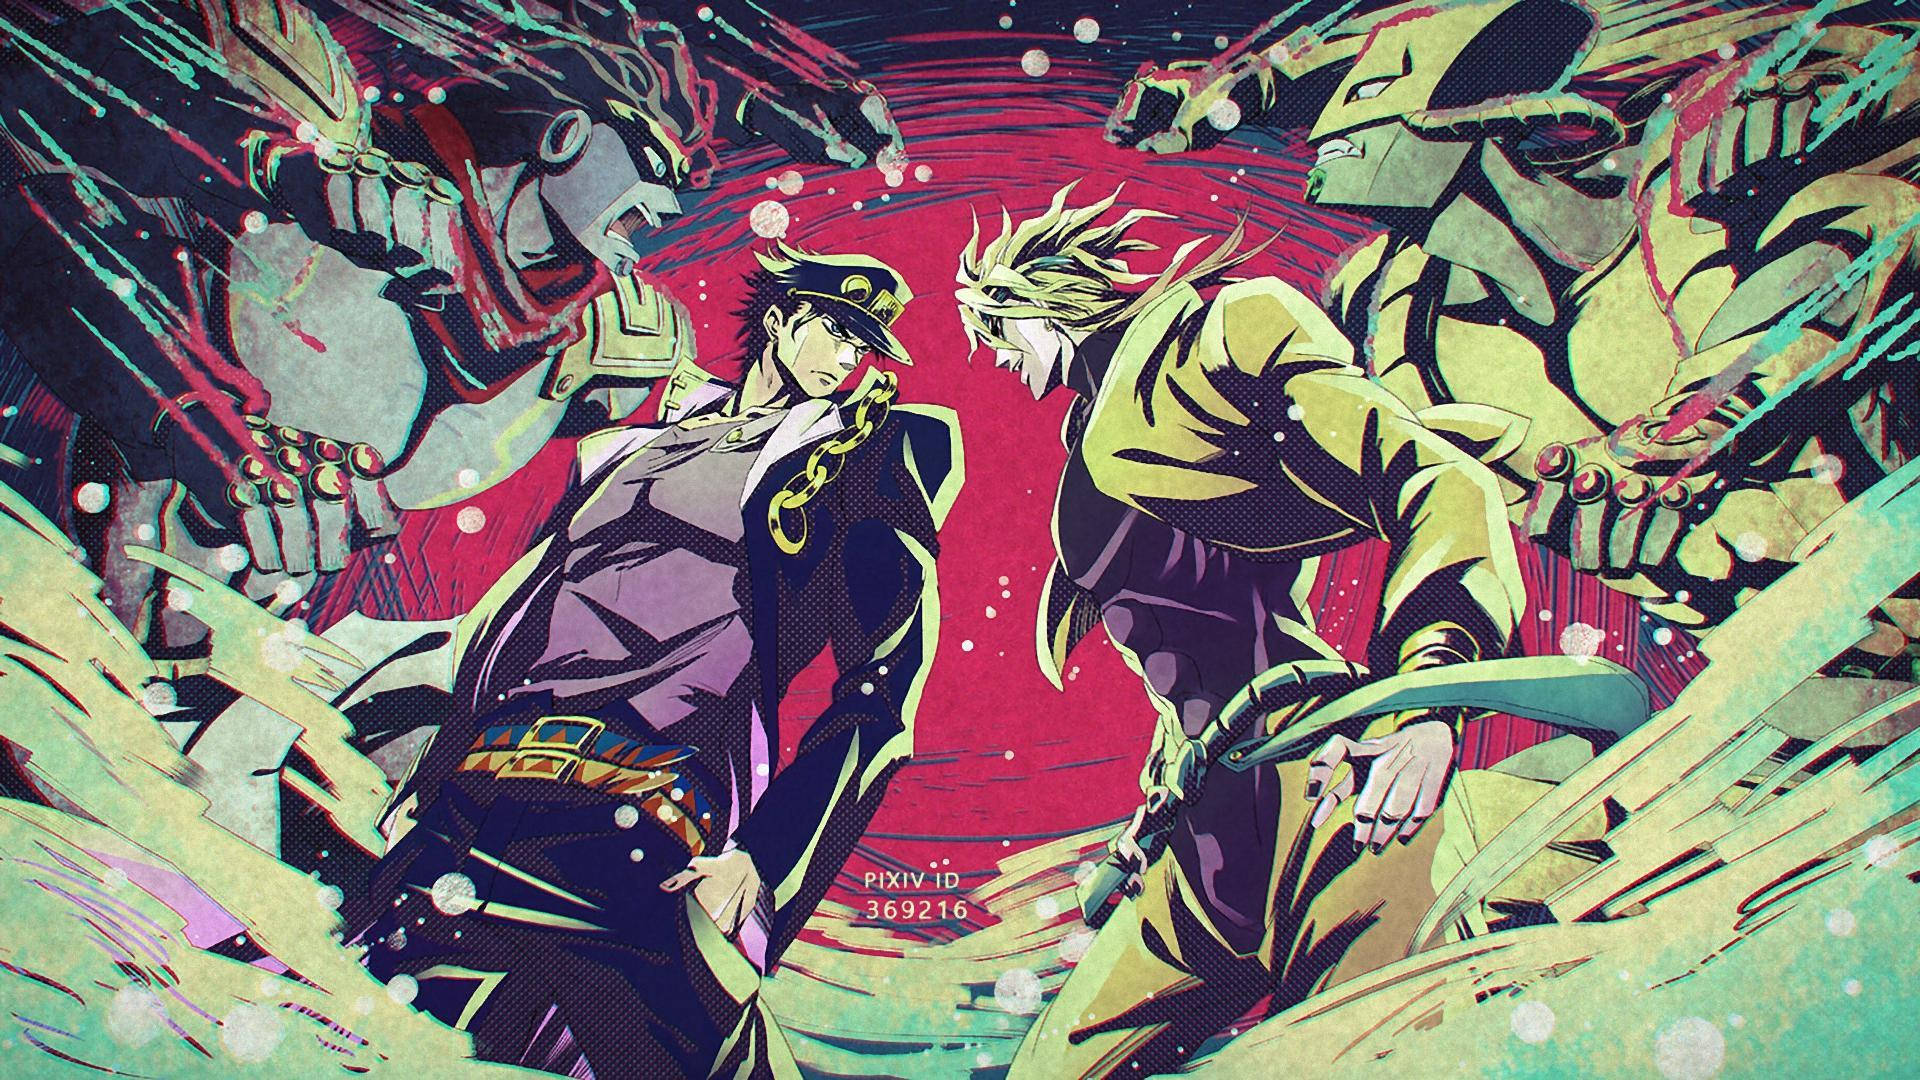 Jotaro Kujo, protagonist of the classic manga series Jojo's Bizarre Adventure, fights off his mortal enemy, the vampire Dio Brando. Wallpaper